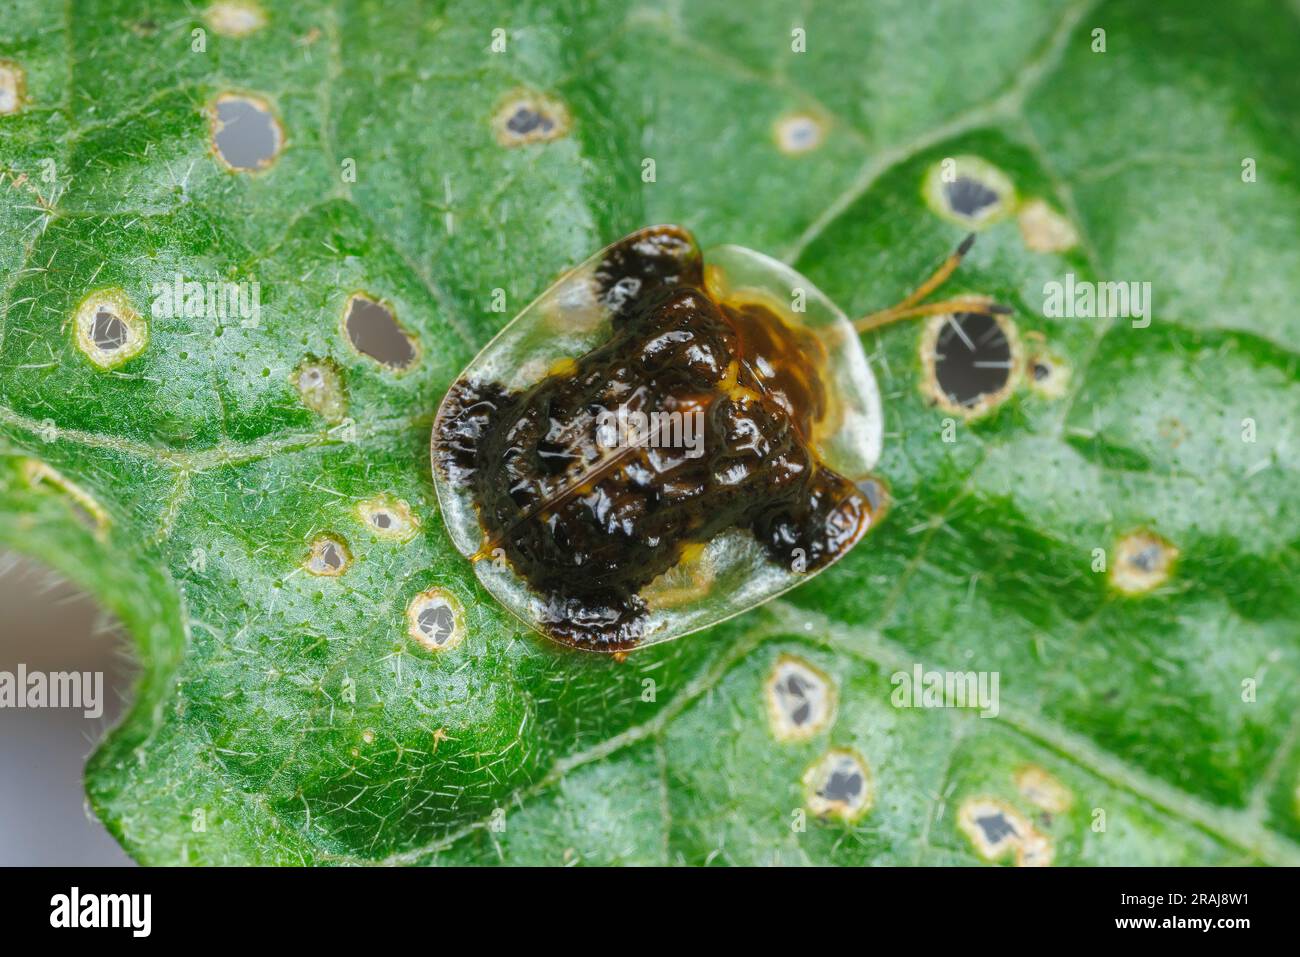 Clavate Tortoise Beetle (Helocassis clavata) on a Carolina Horsenettle (Solanum carolinense) leaf. Stock Photo